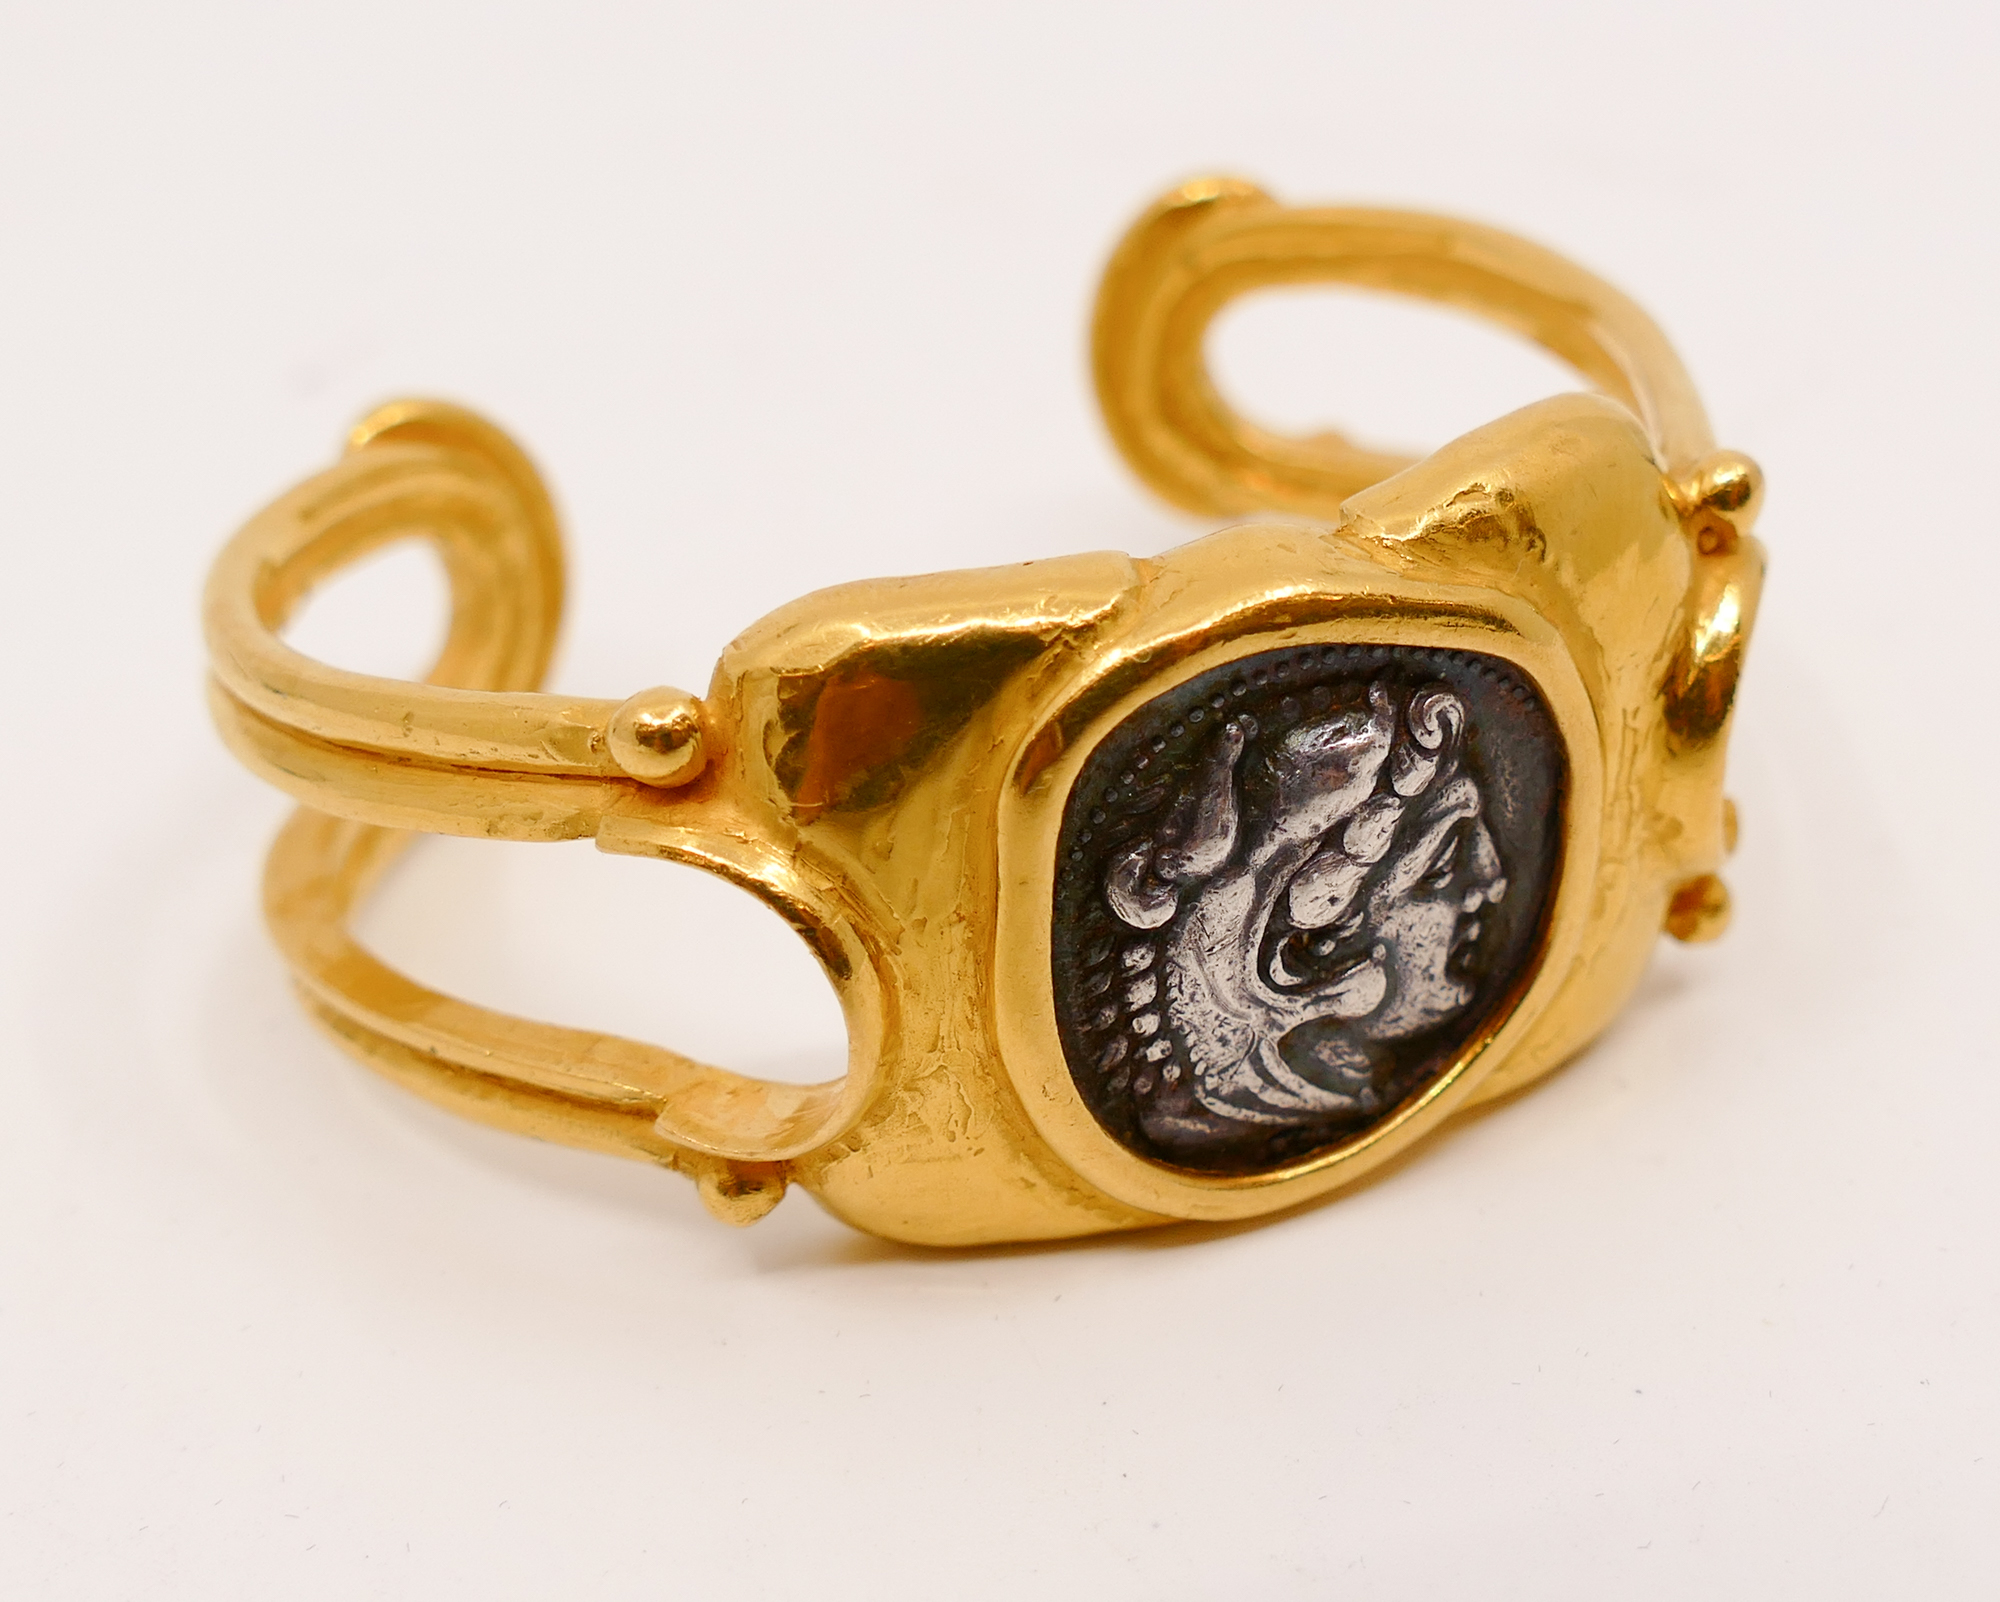 22K Gold Bangle Bracelet with Ancient